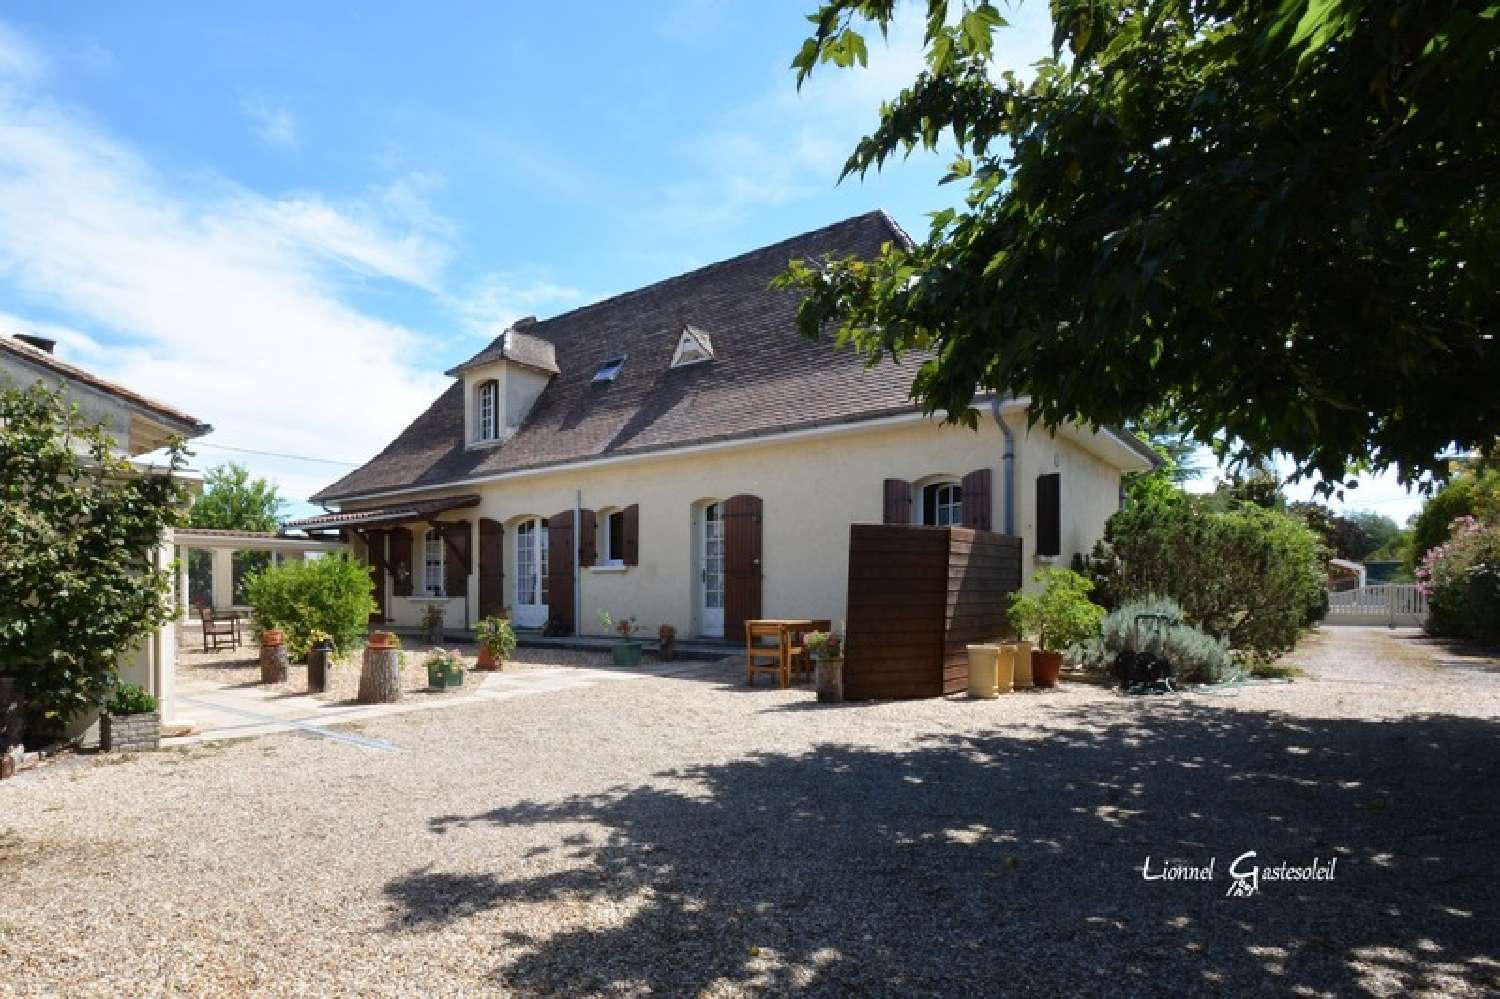  à vendre maison Pineuilh Gironde 2